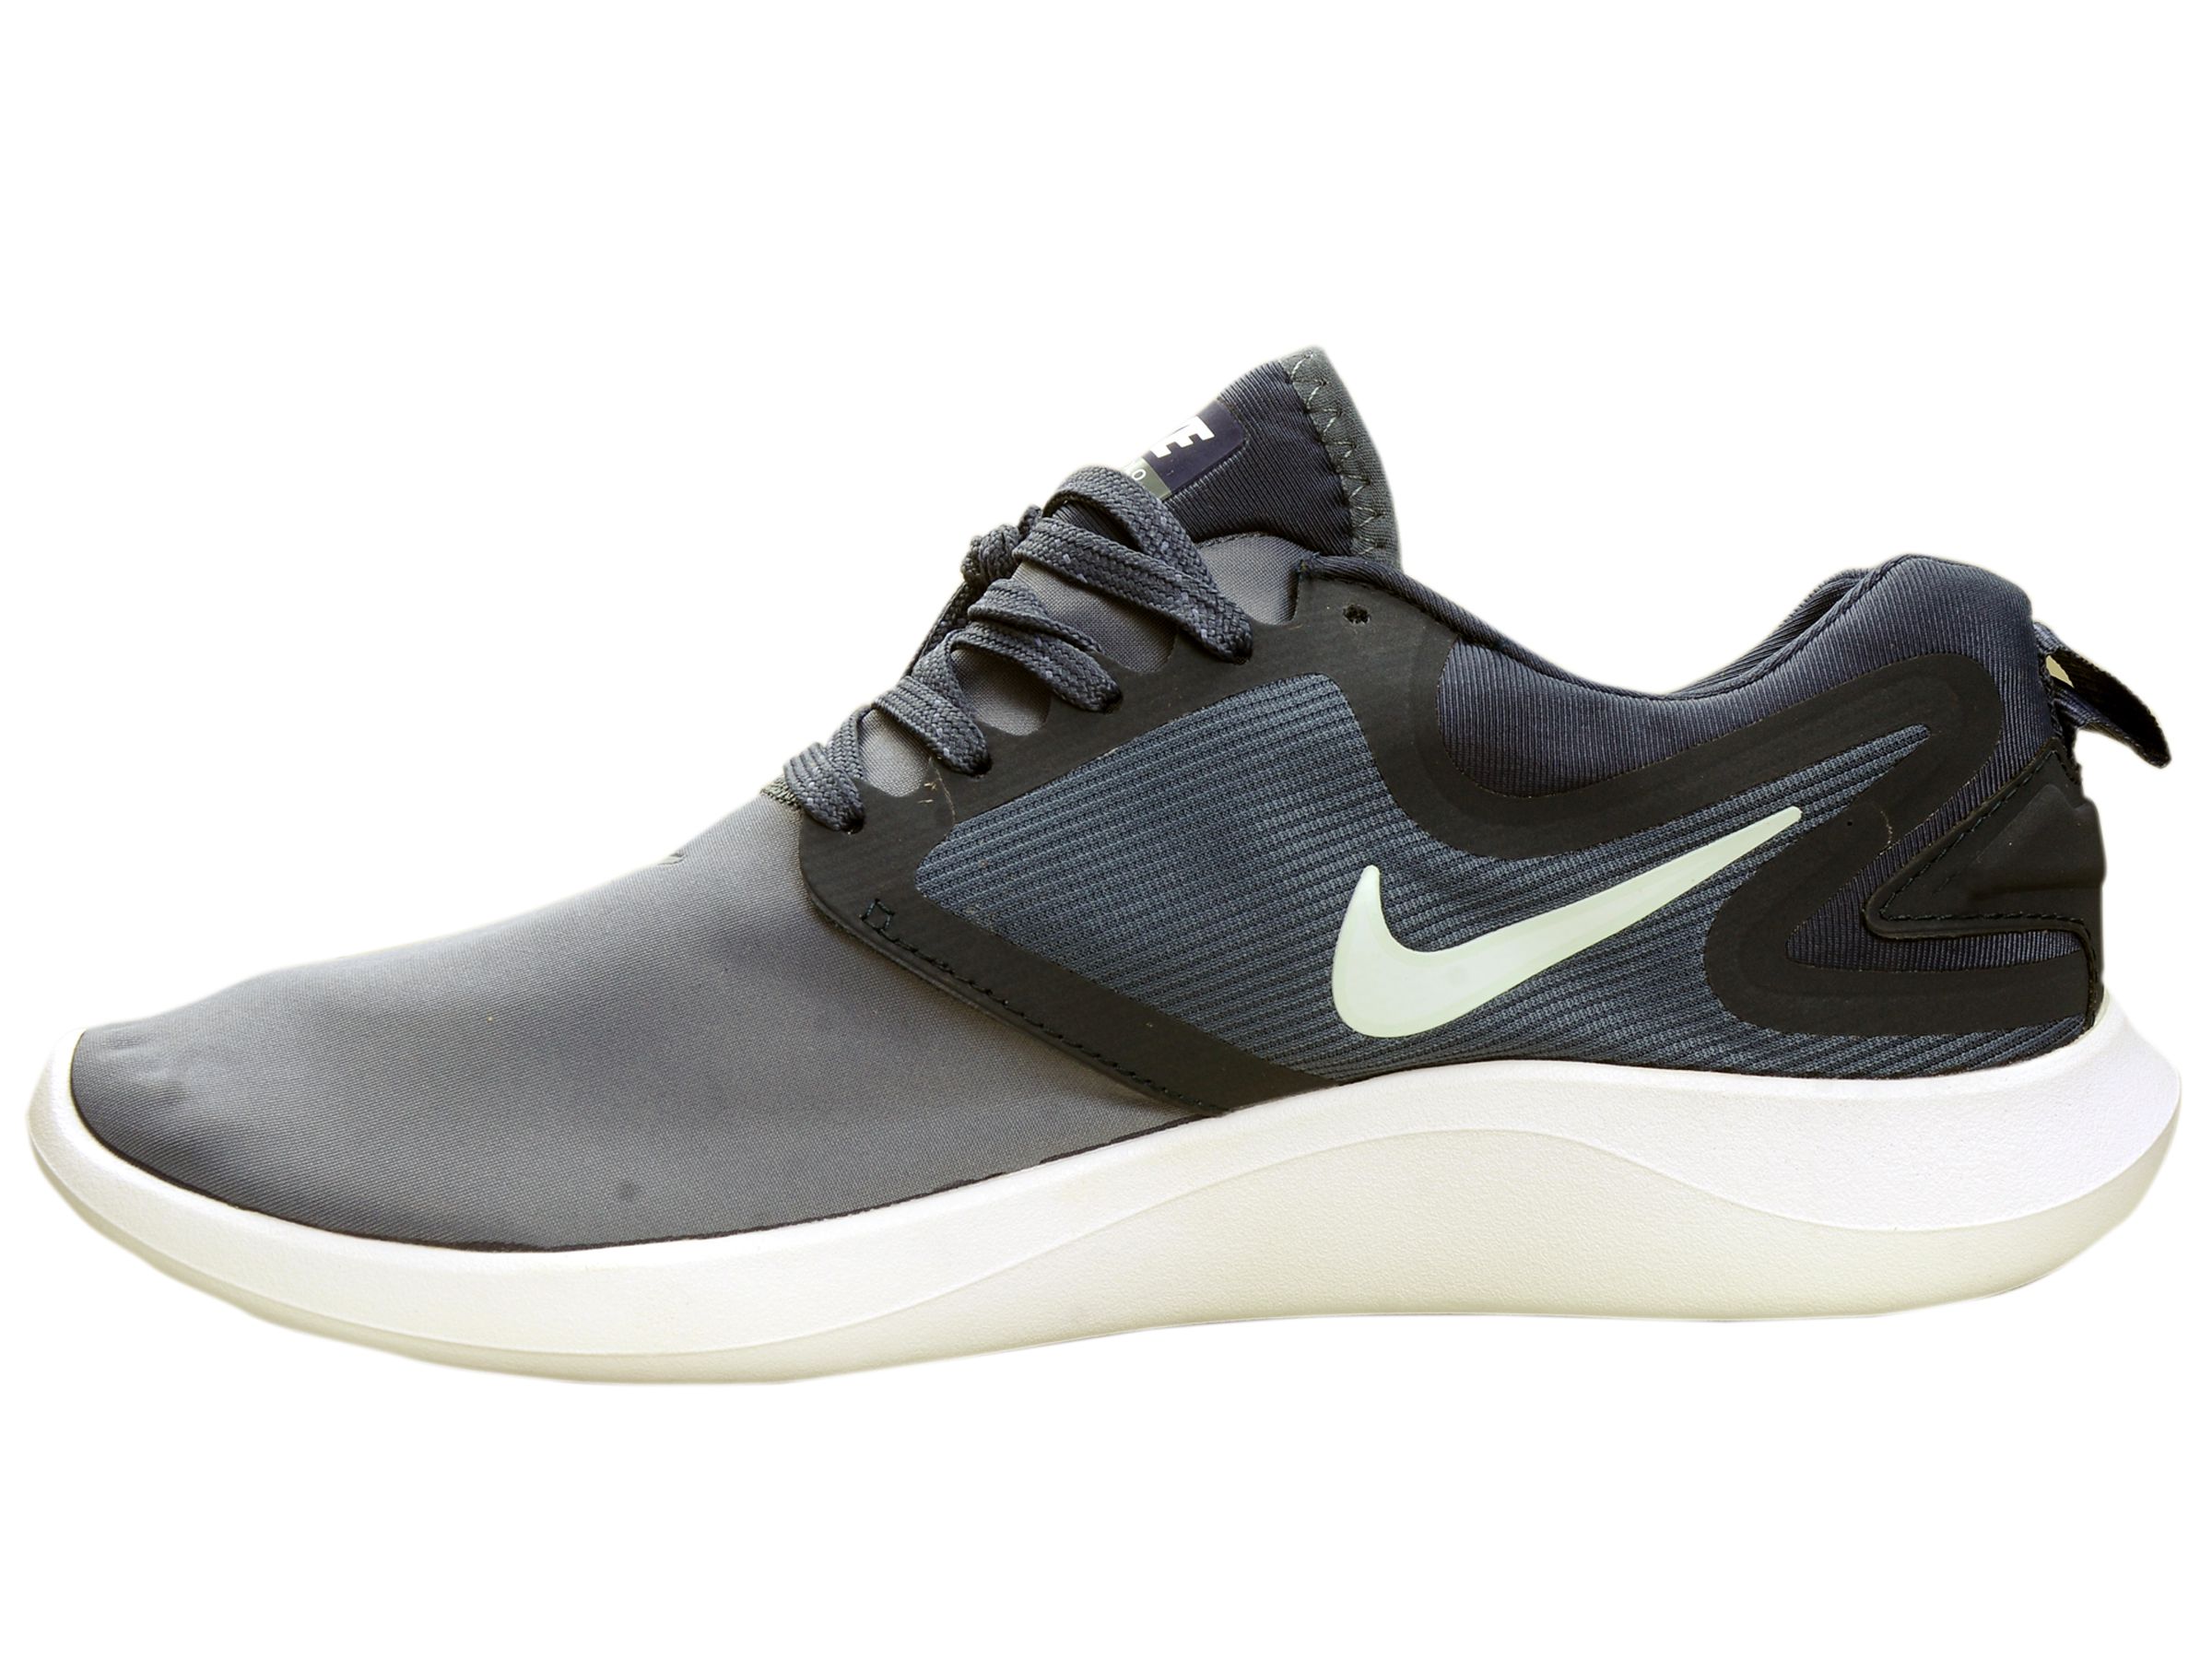 Nike 1 Nike LunarSolo Sneakers Blue Casual Shoes - Buy Nike 1 Nike ...
